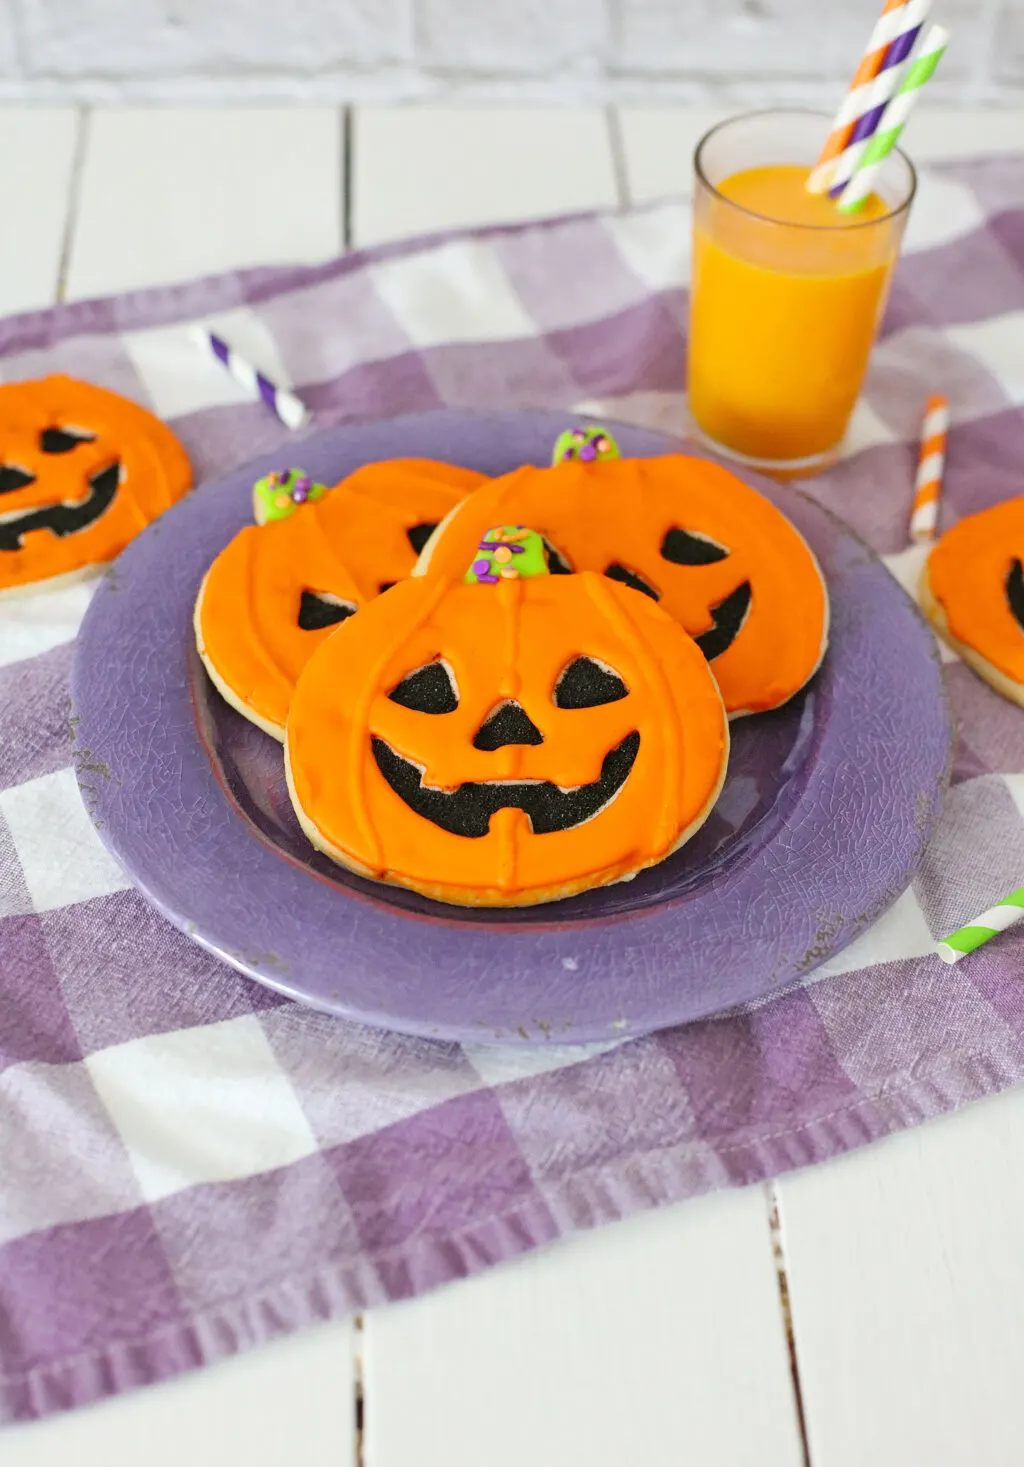 jack-o'-lantern cookies decorated to look like pumpkins on a purple plate